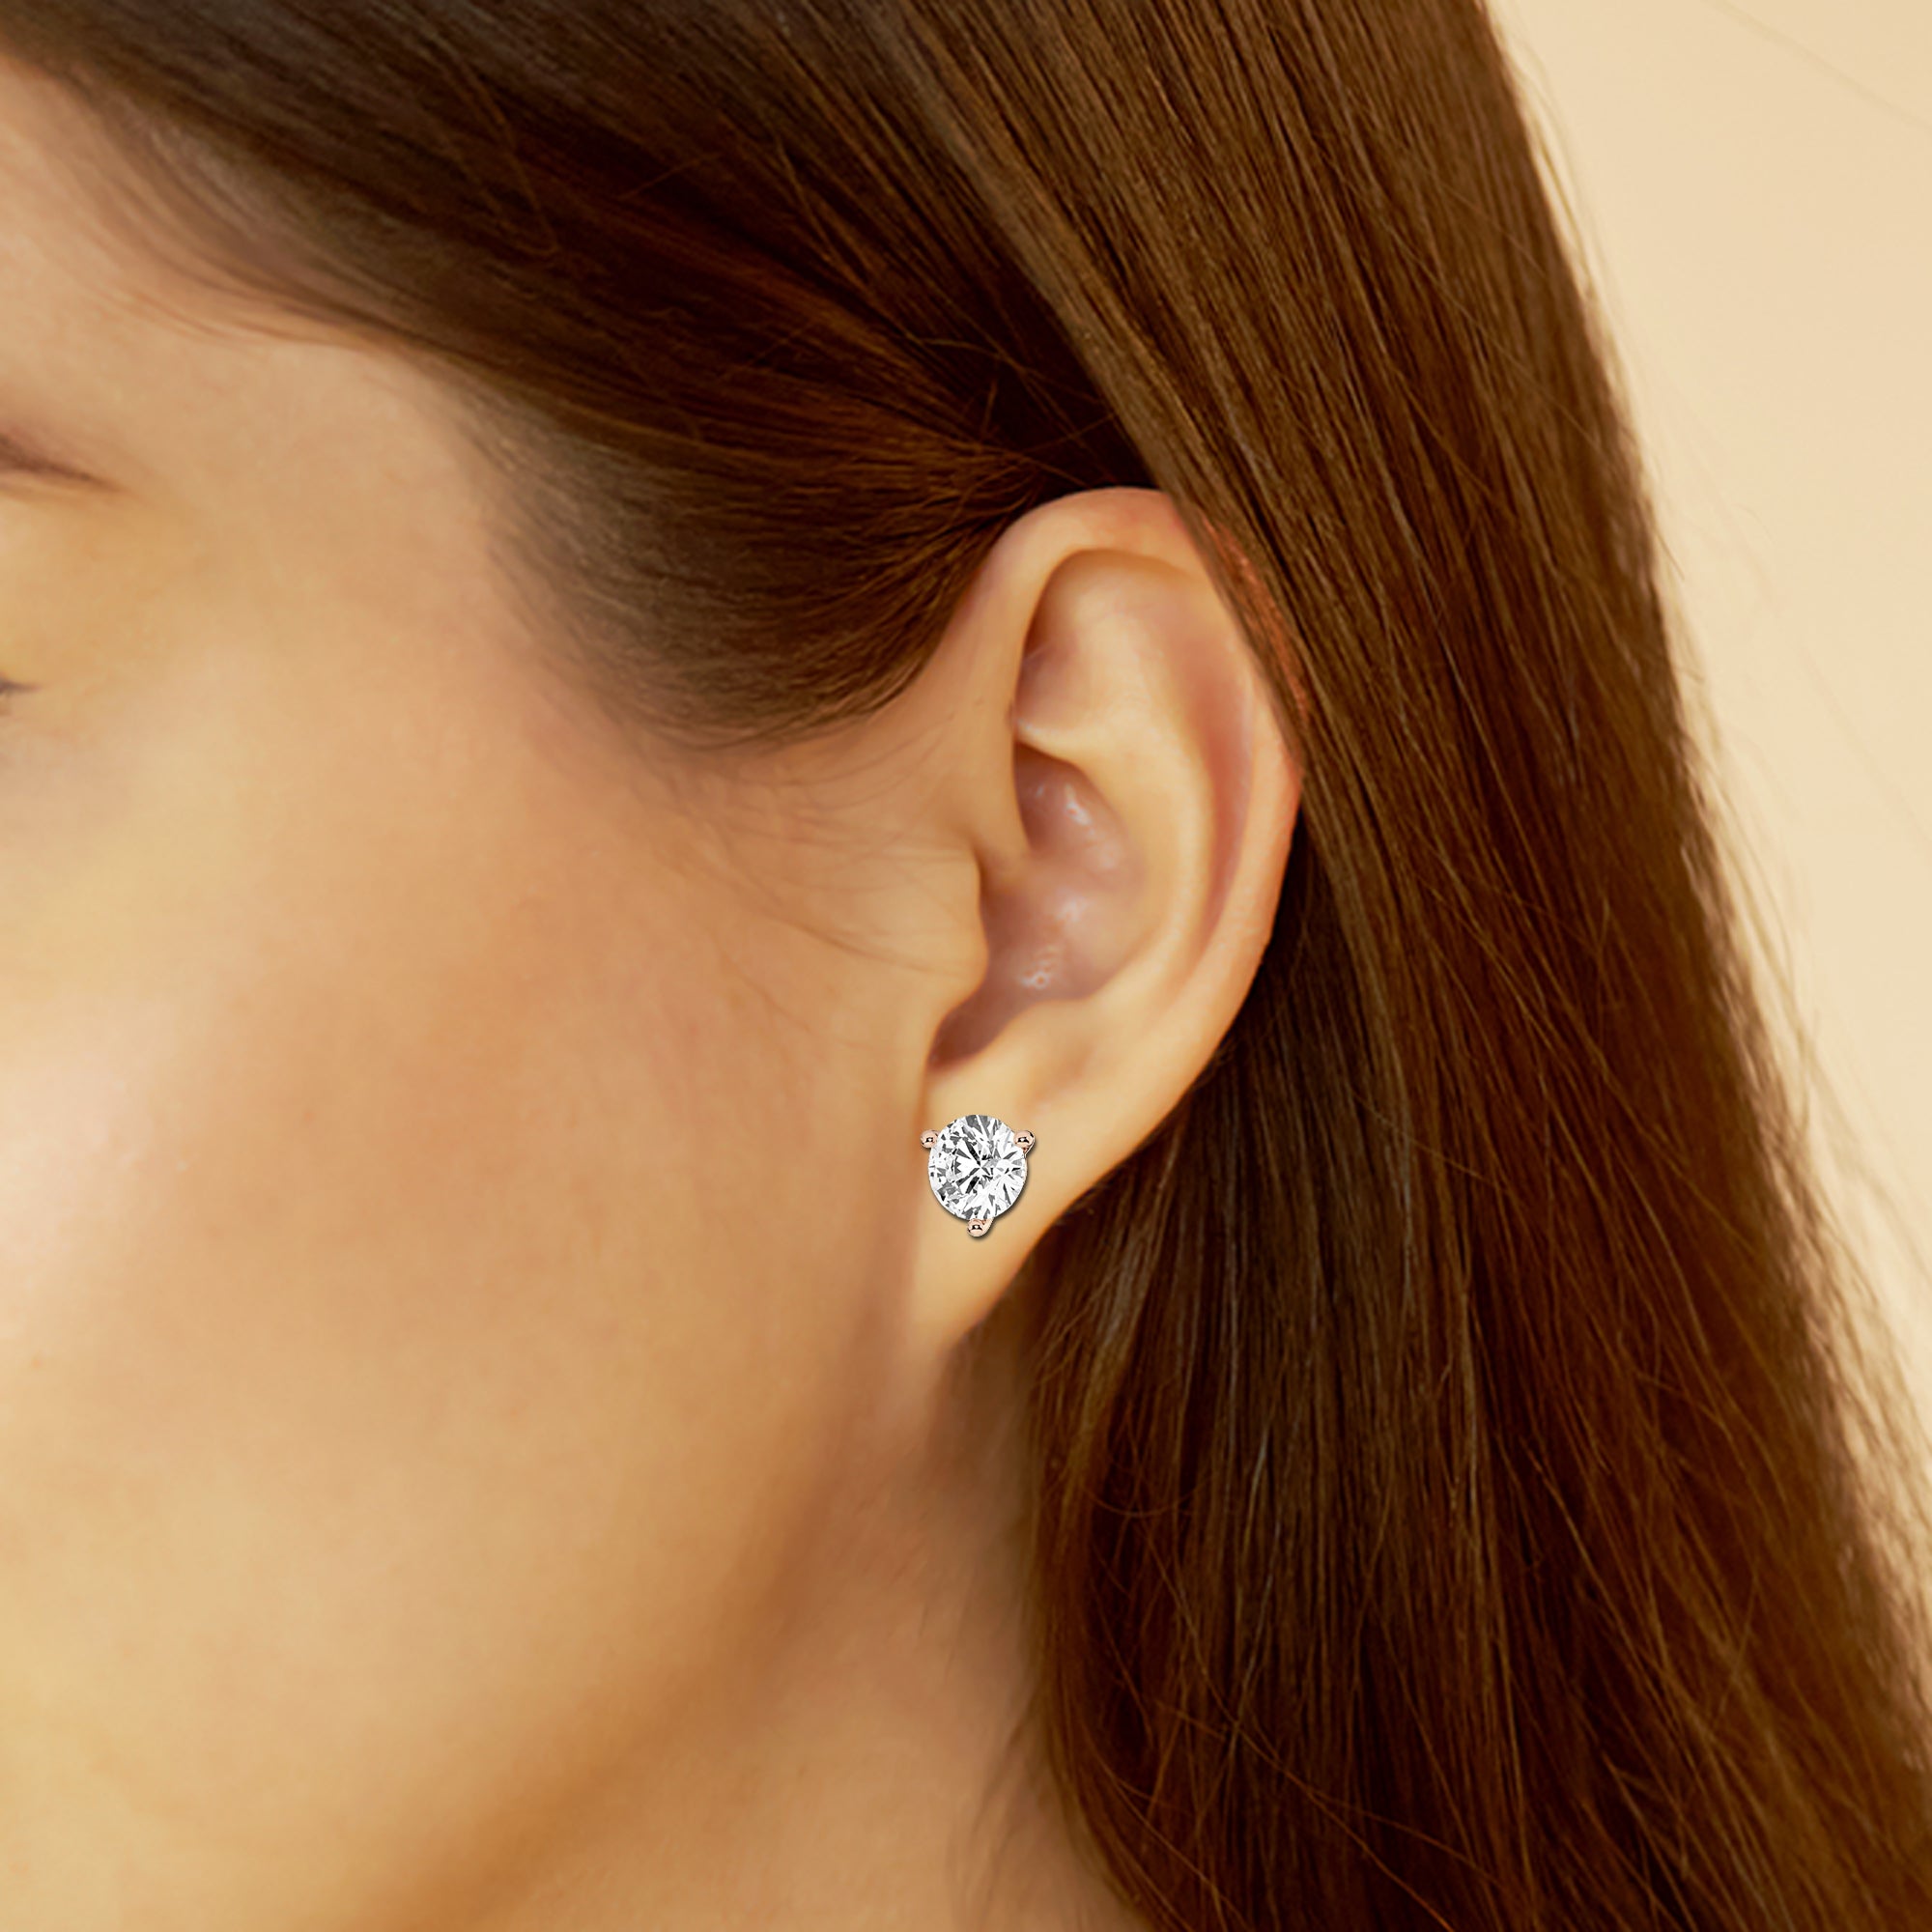 4 carat Round Diamond Earring Studs